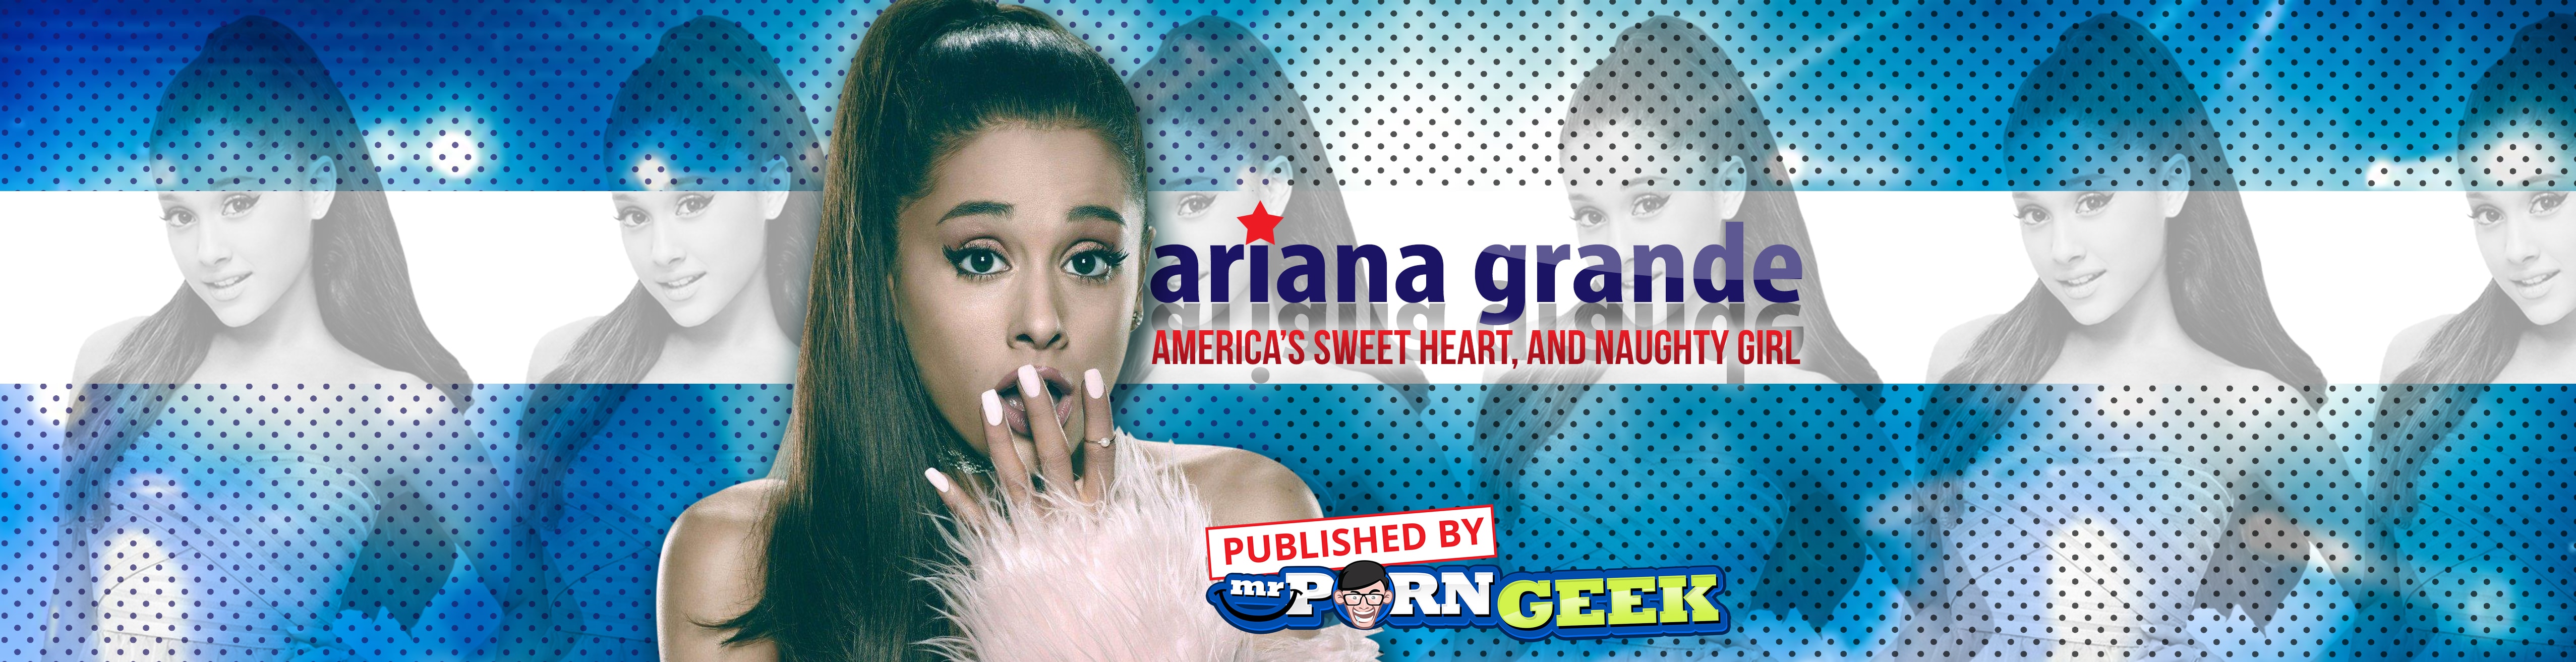 Blue Hair Ariana Grande Look Alike Porn - Hot Ariana Grande - Nude America's Sweet Heart, And Naughty Girl